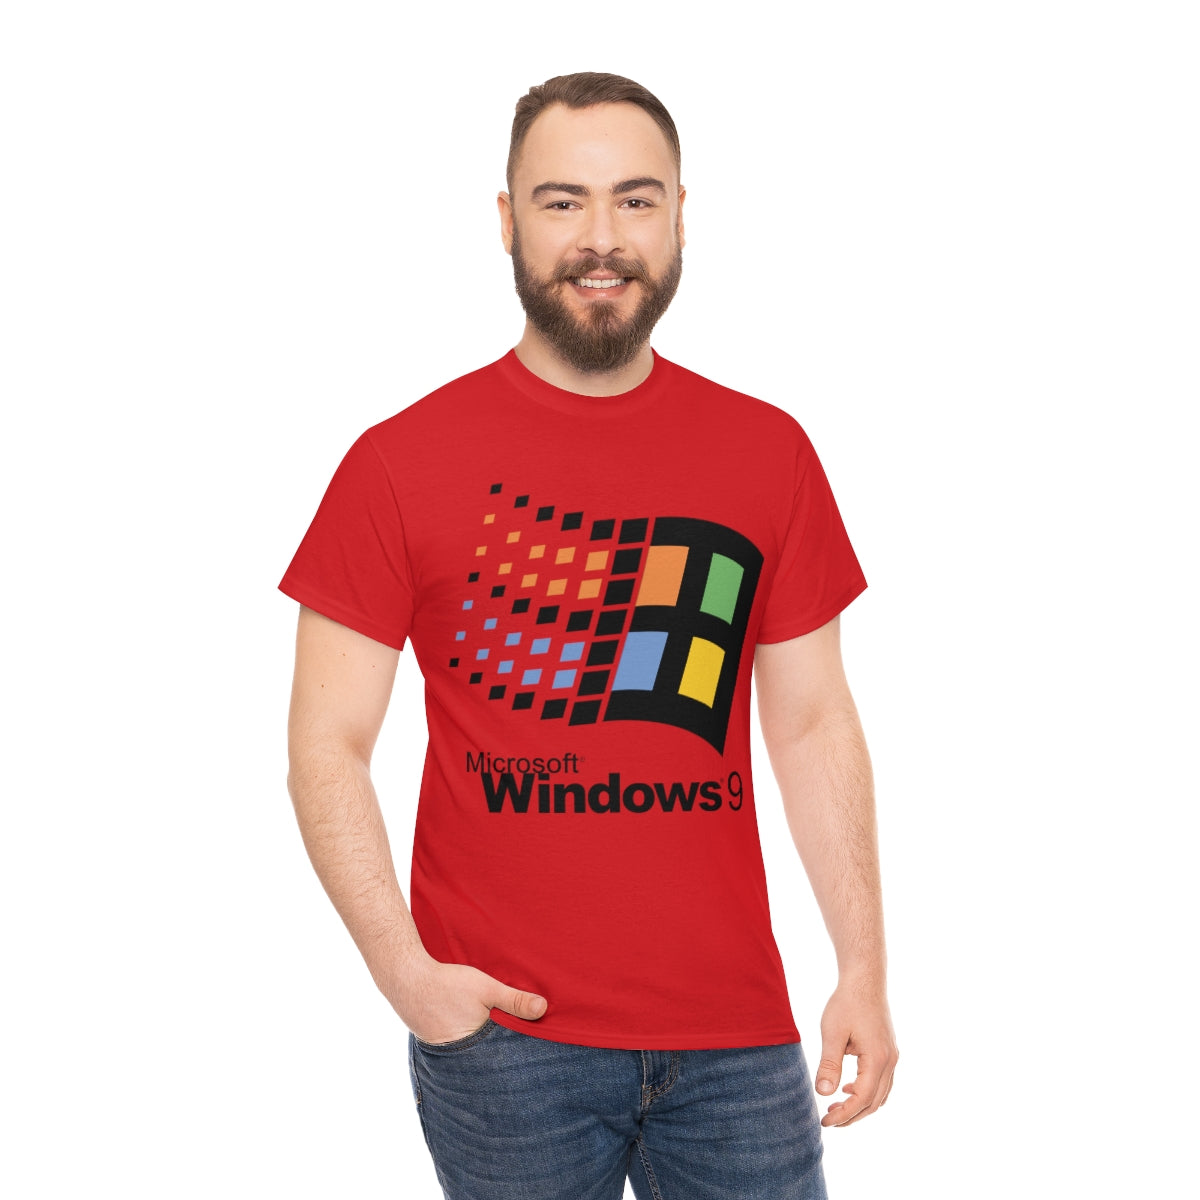 Windows 9 Shirt